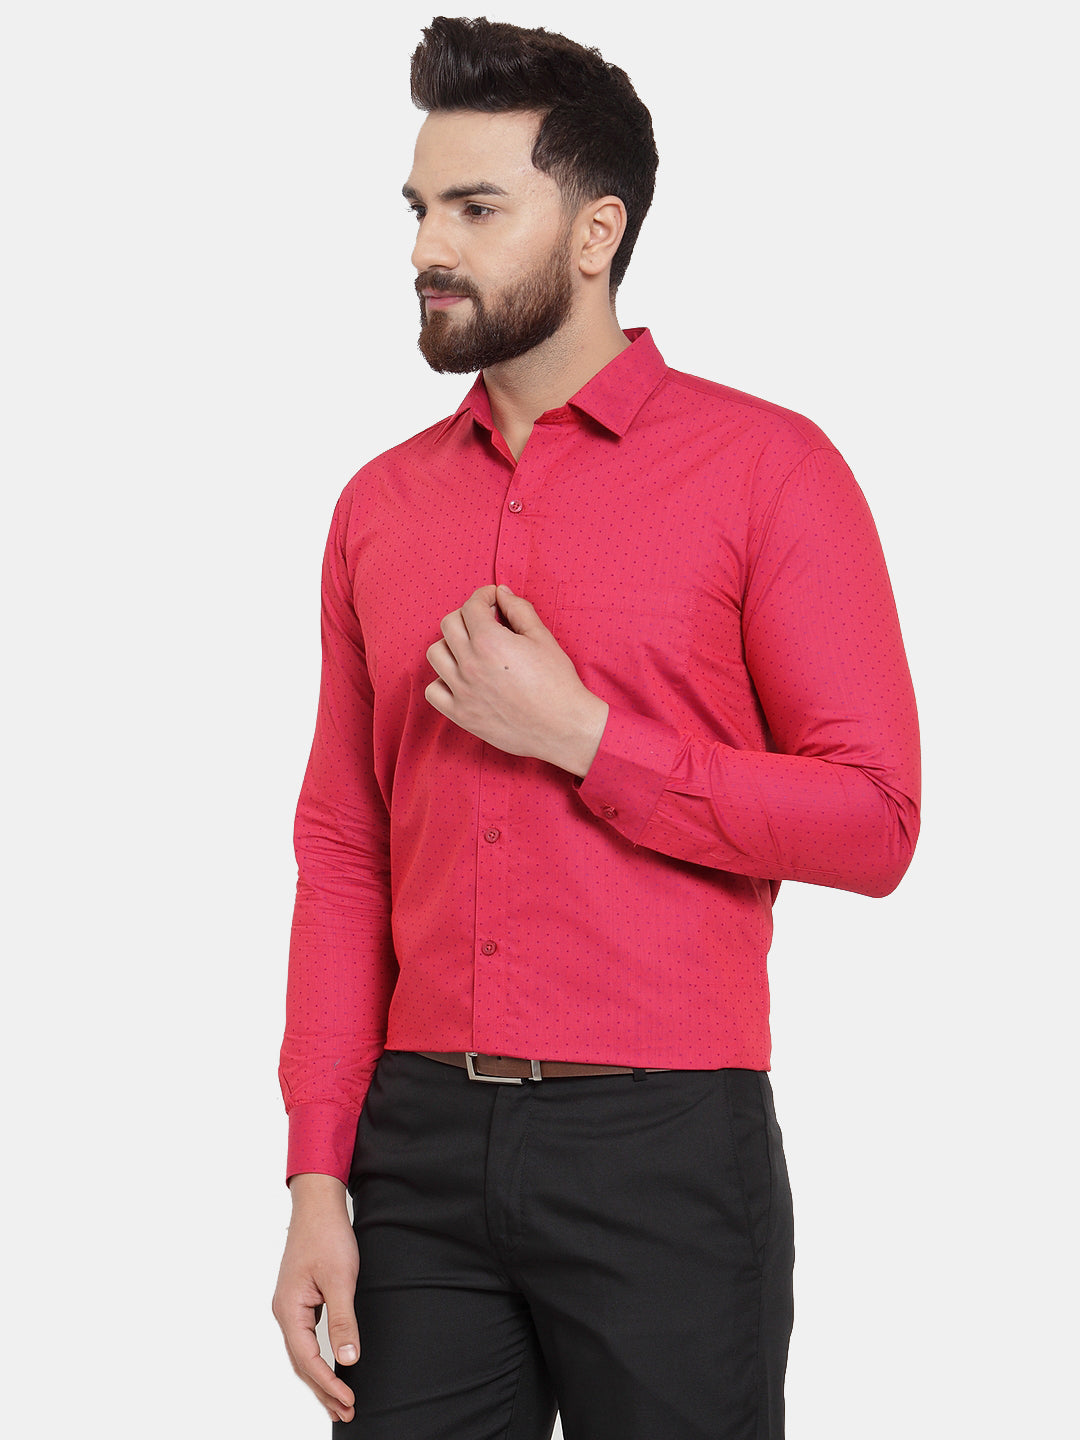 Men's Red Cotton Polka Dots Formal Shirts ( SF 739Red ) - Jainish